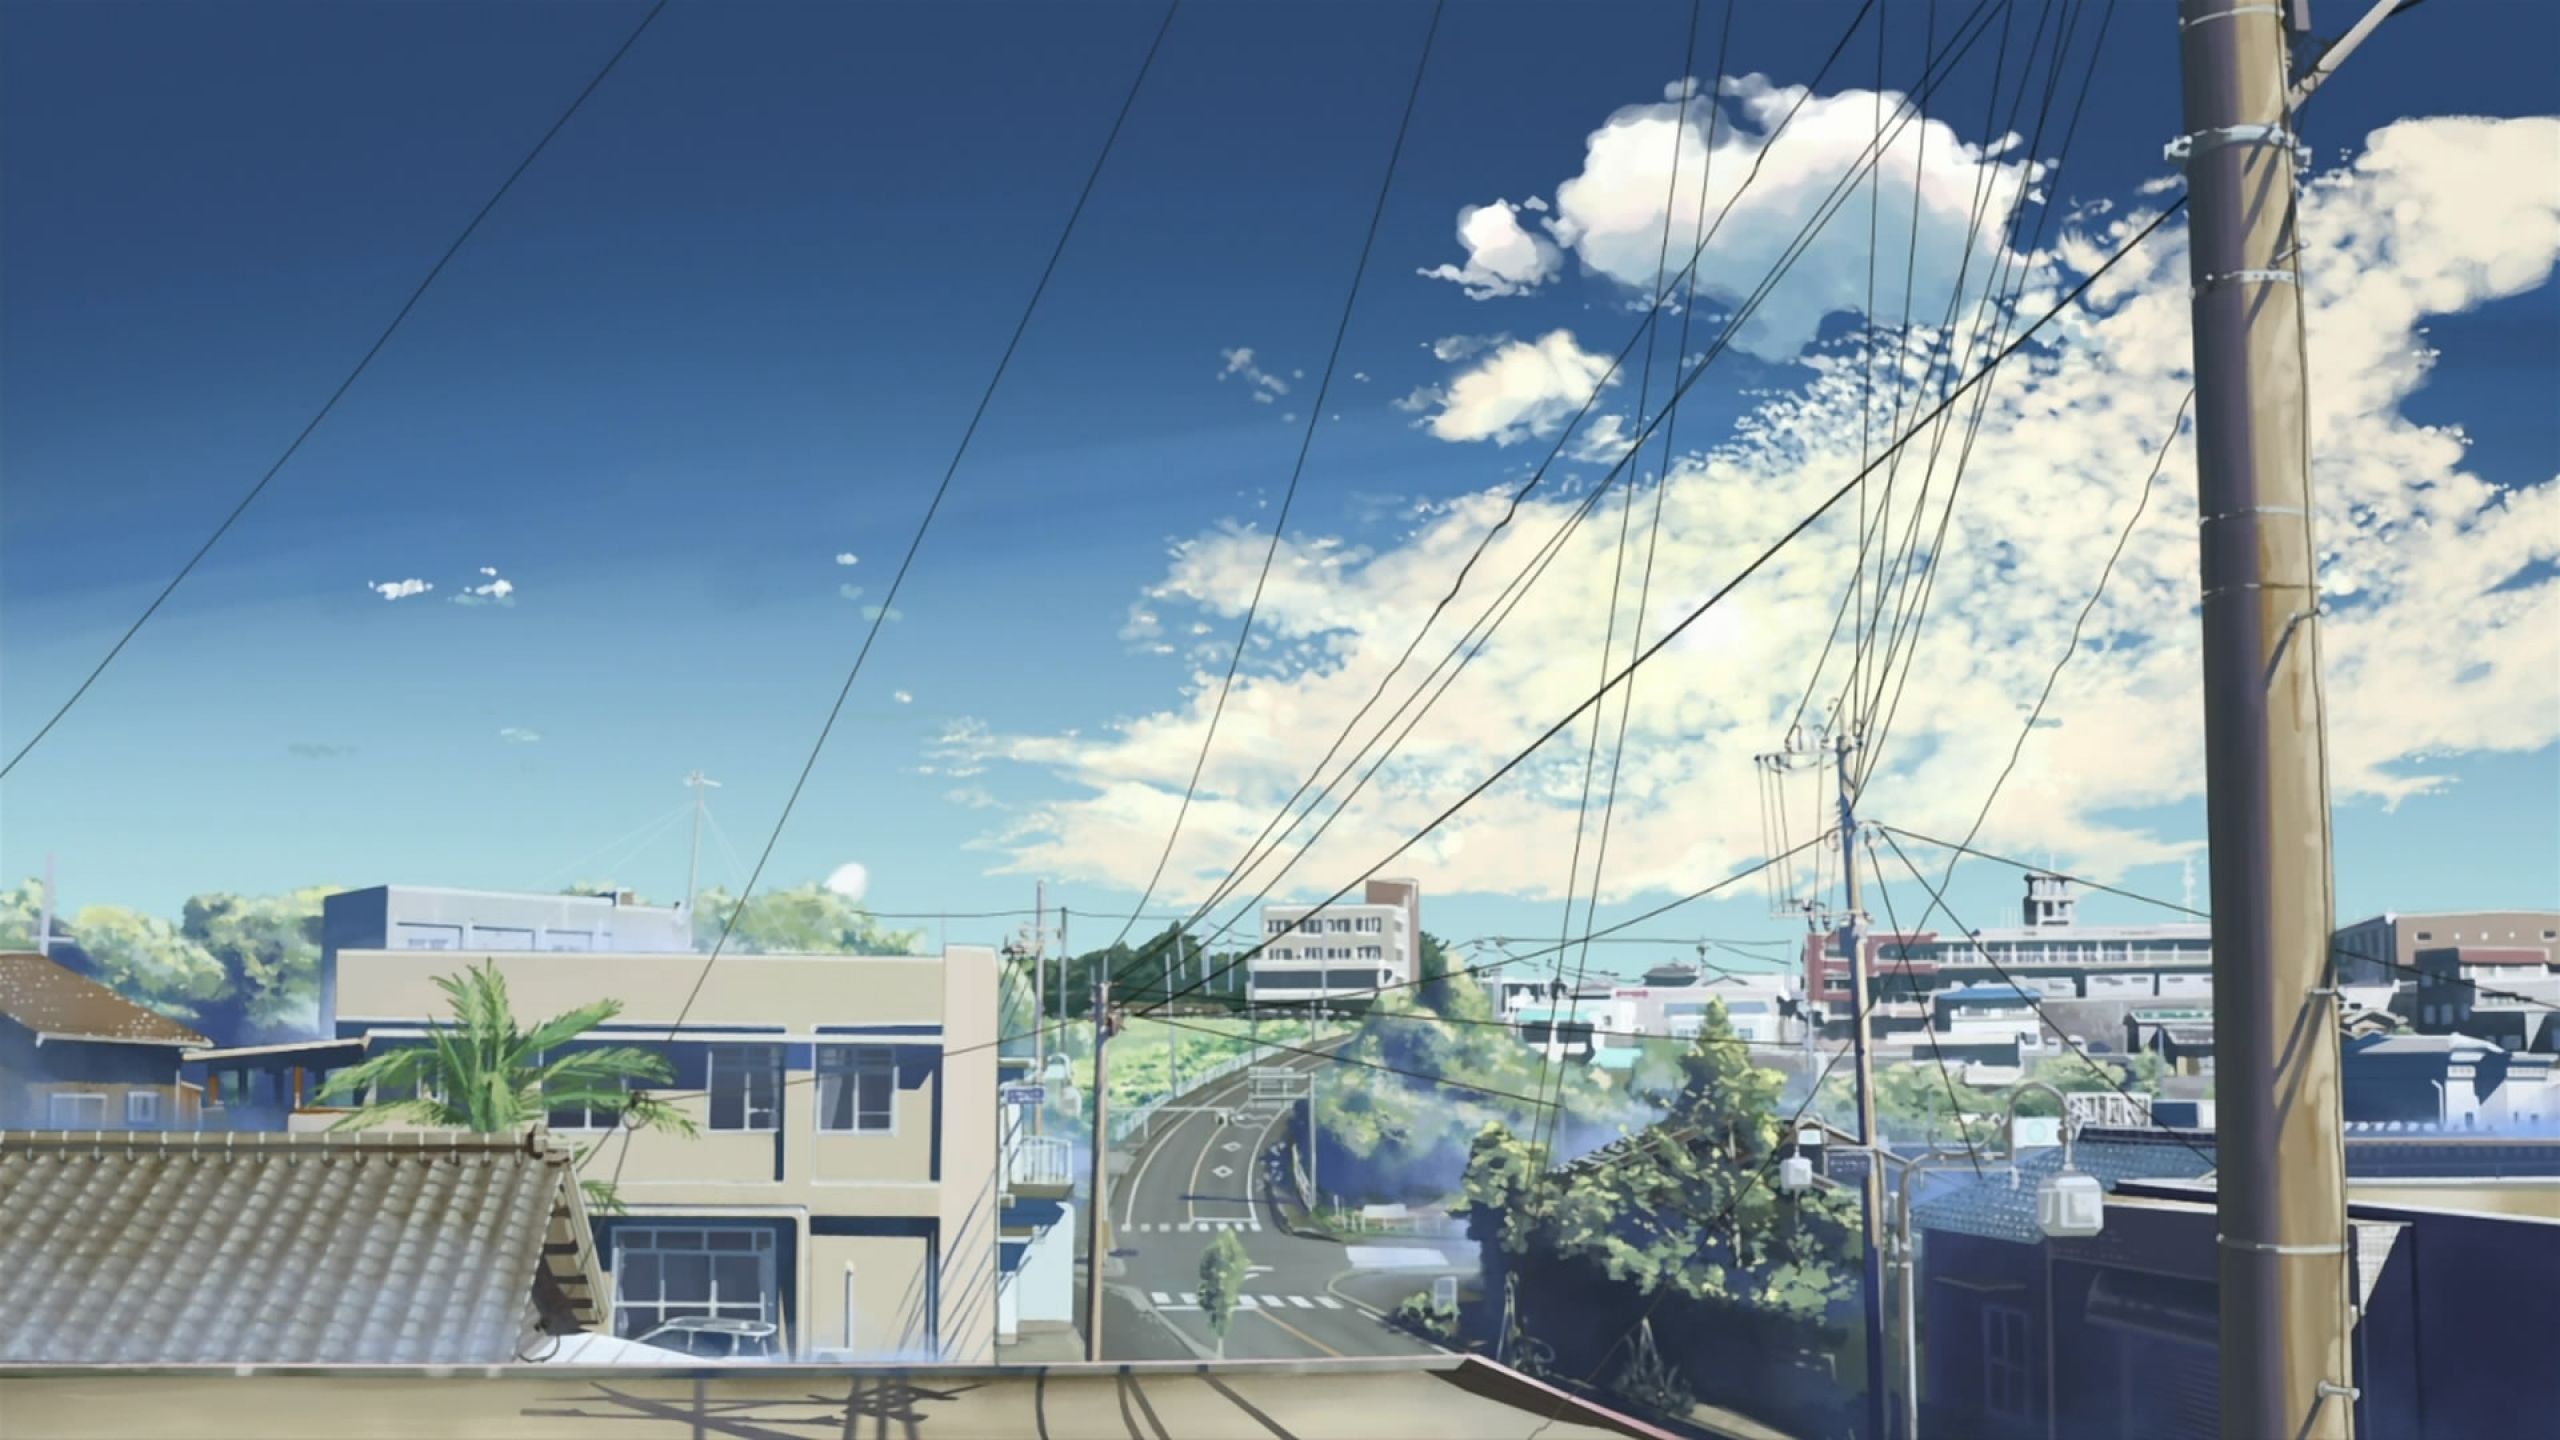 Anime Aesthetic Wallpaper HD Soal Latihan Unbk Soal